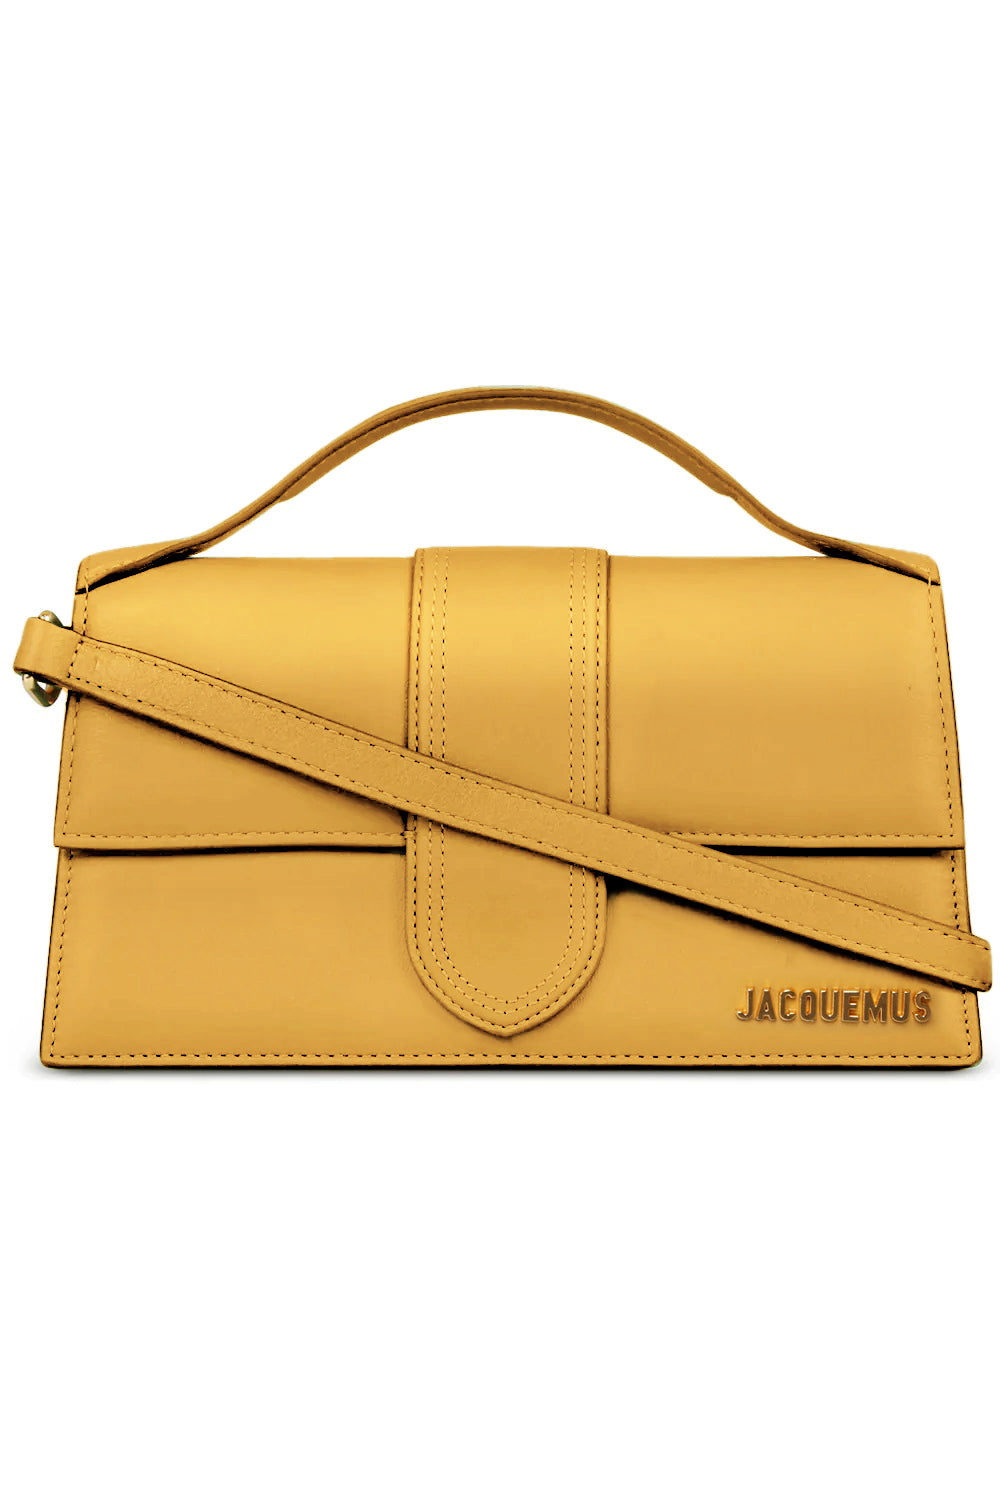 Jacquemus Bambino Suede Bag - Dark Yellow